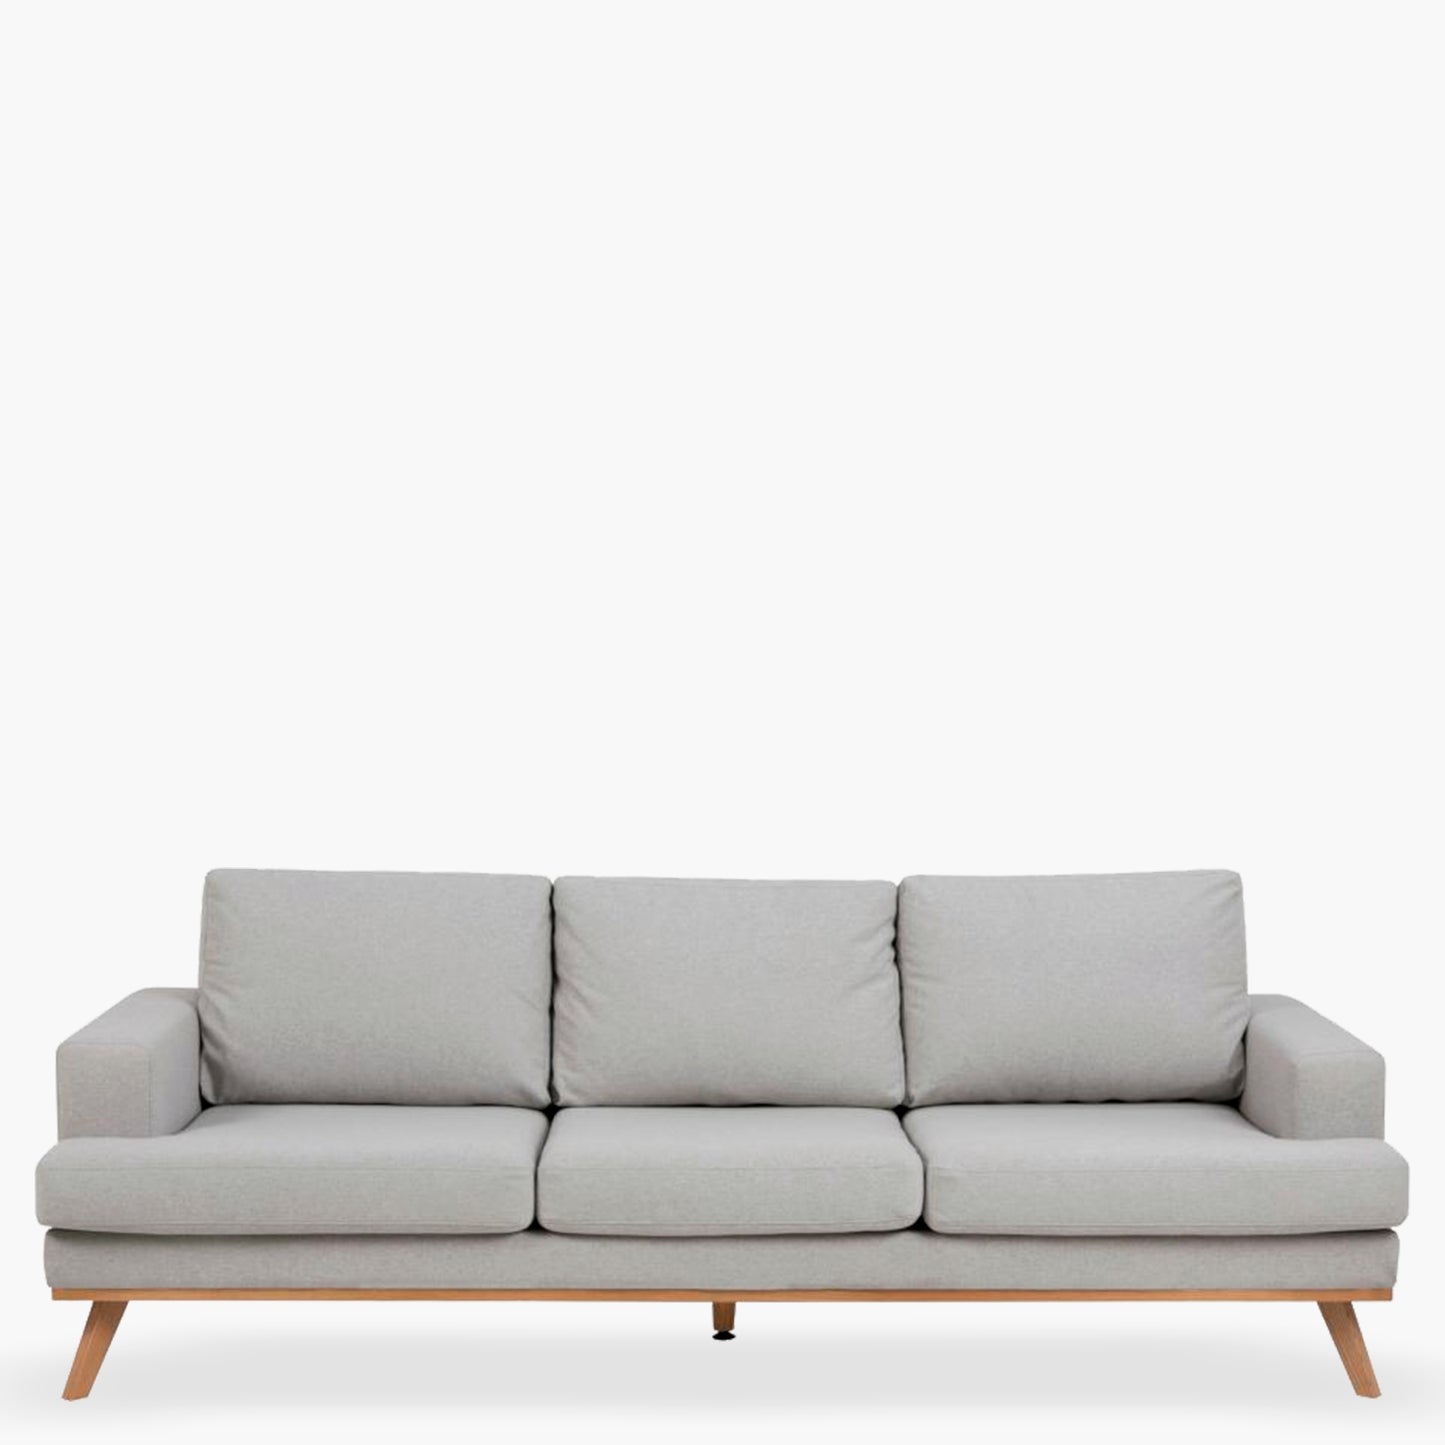 sofa-3c-norwich-gris-claro-form-design